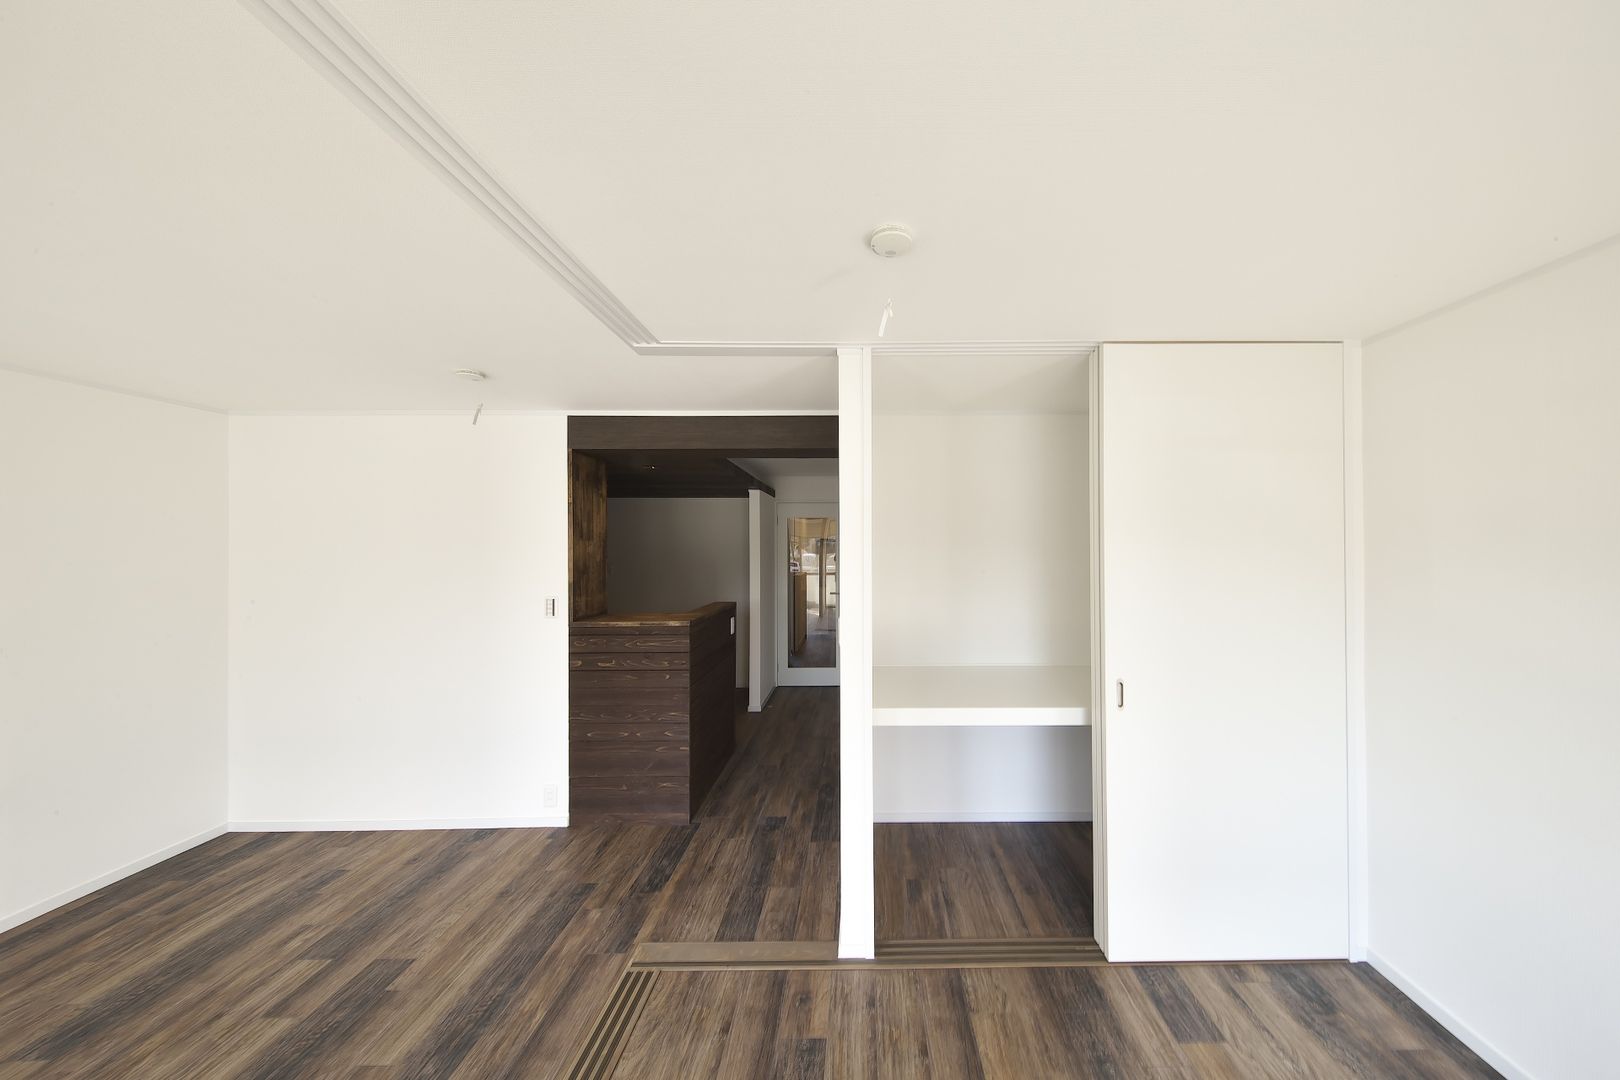 Rental apartment | renovation, FRCHIS,WORKS FRCHIS,WORKS Living room لکڑی Wood effect